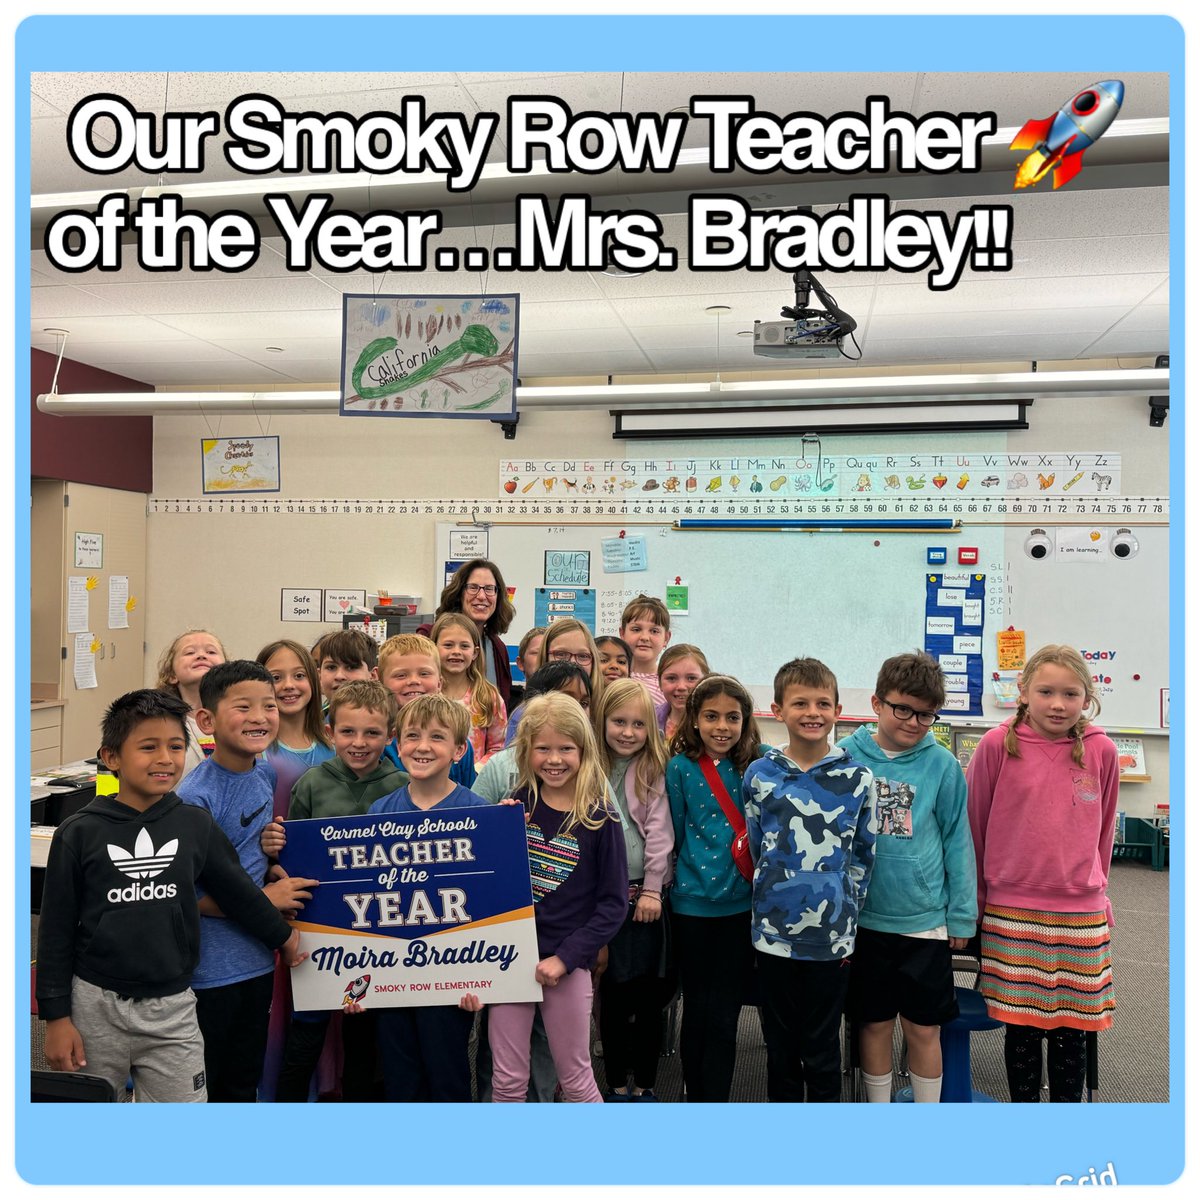 We love Mrs. Bradley!! Our Smoky Row Teacher of the Year. So deserving!! 🚀 @myccs